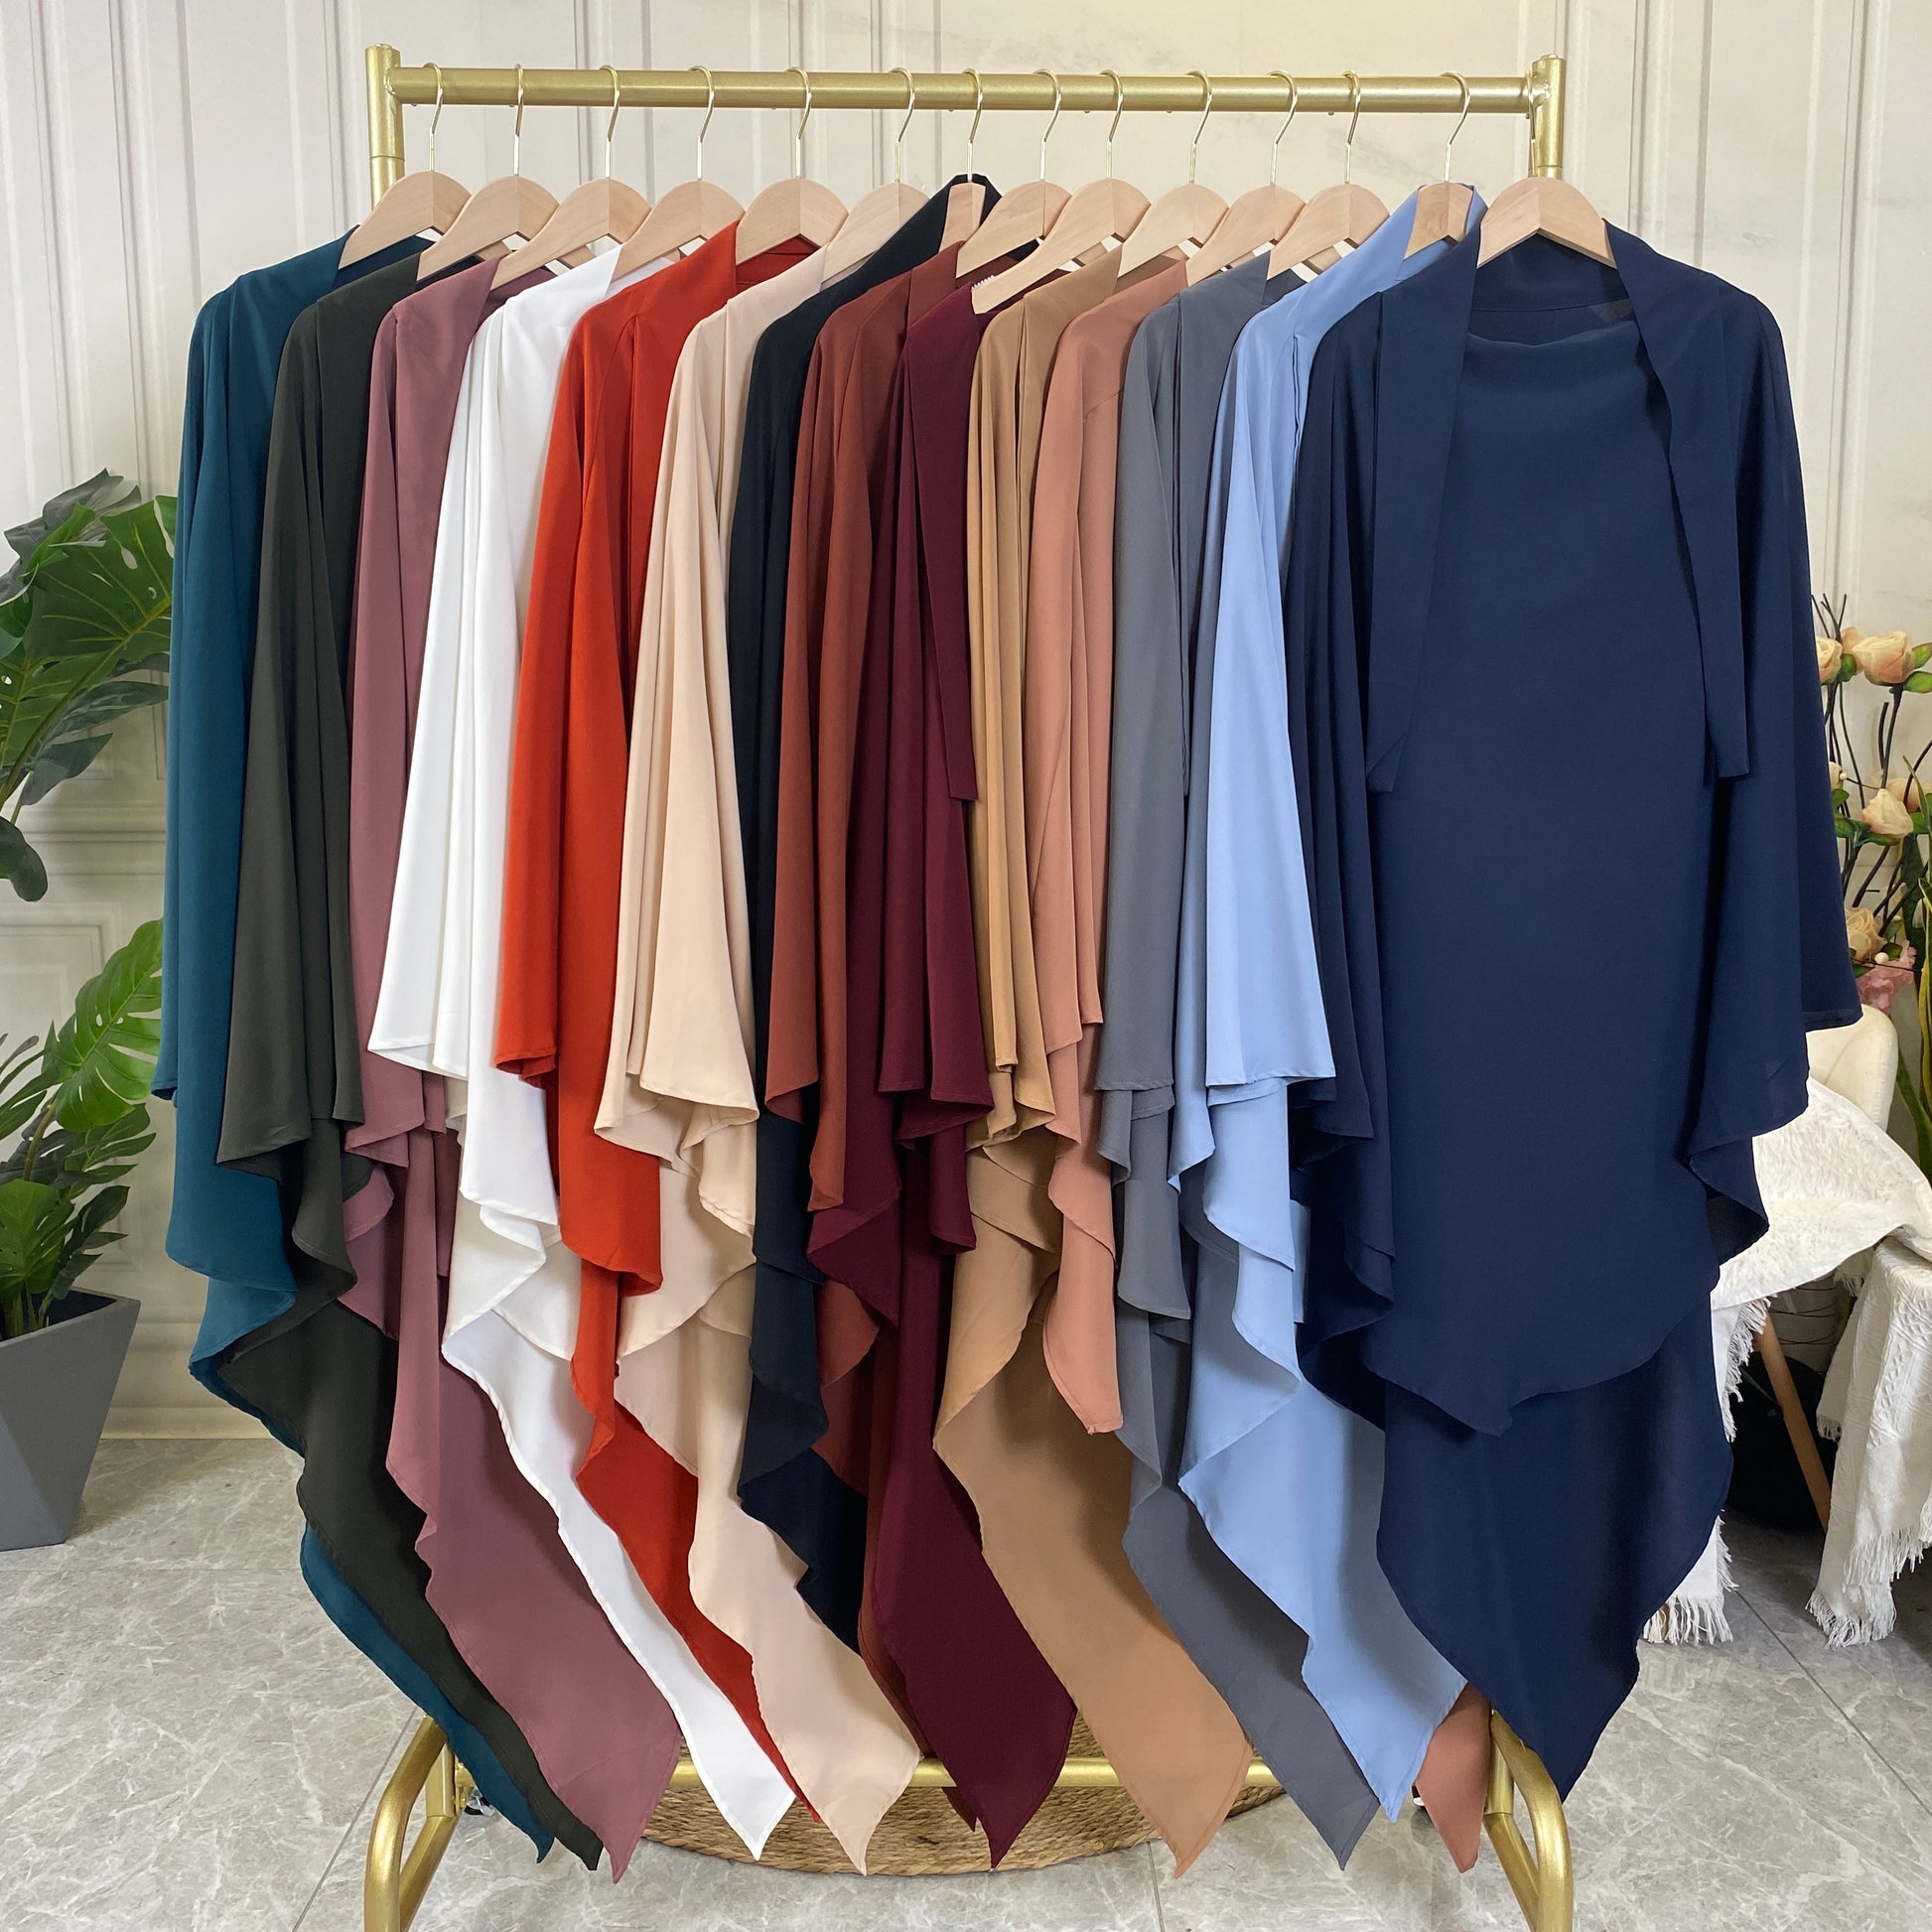 Khimar : Single Layer Triangular Diamond Instant Khimar-Hijab-Jilbab for Girls & Women in Single Layer Light Navy Pink Color | Tie Back Burkha Jilbab Khimar Style Abaya Hijab Niqab Islamic Modest Wear